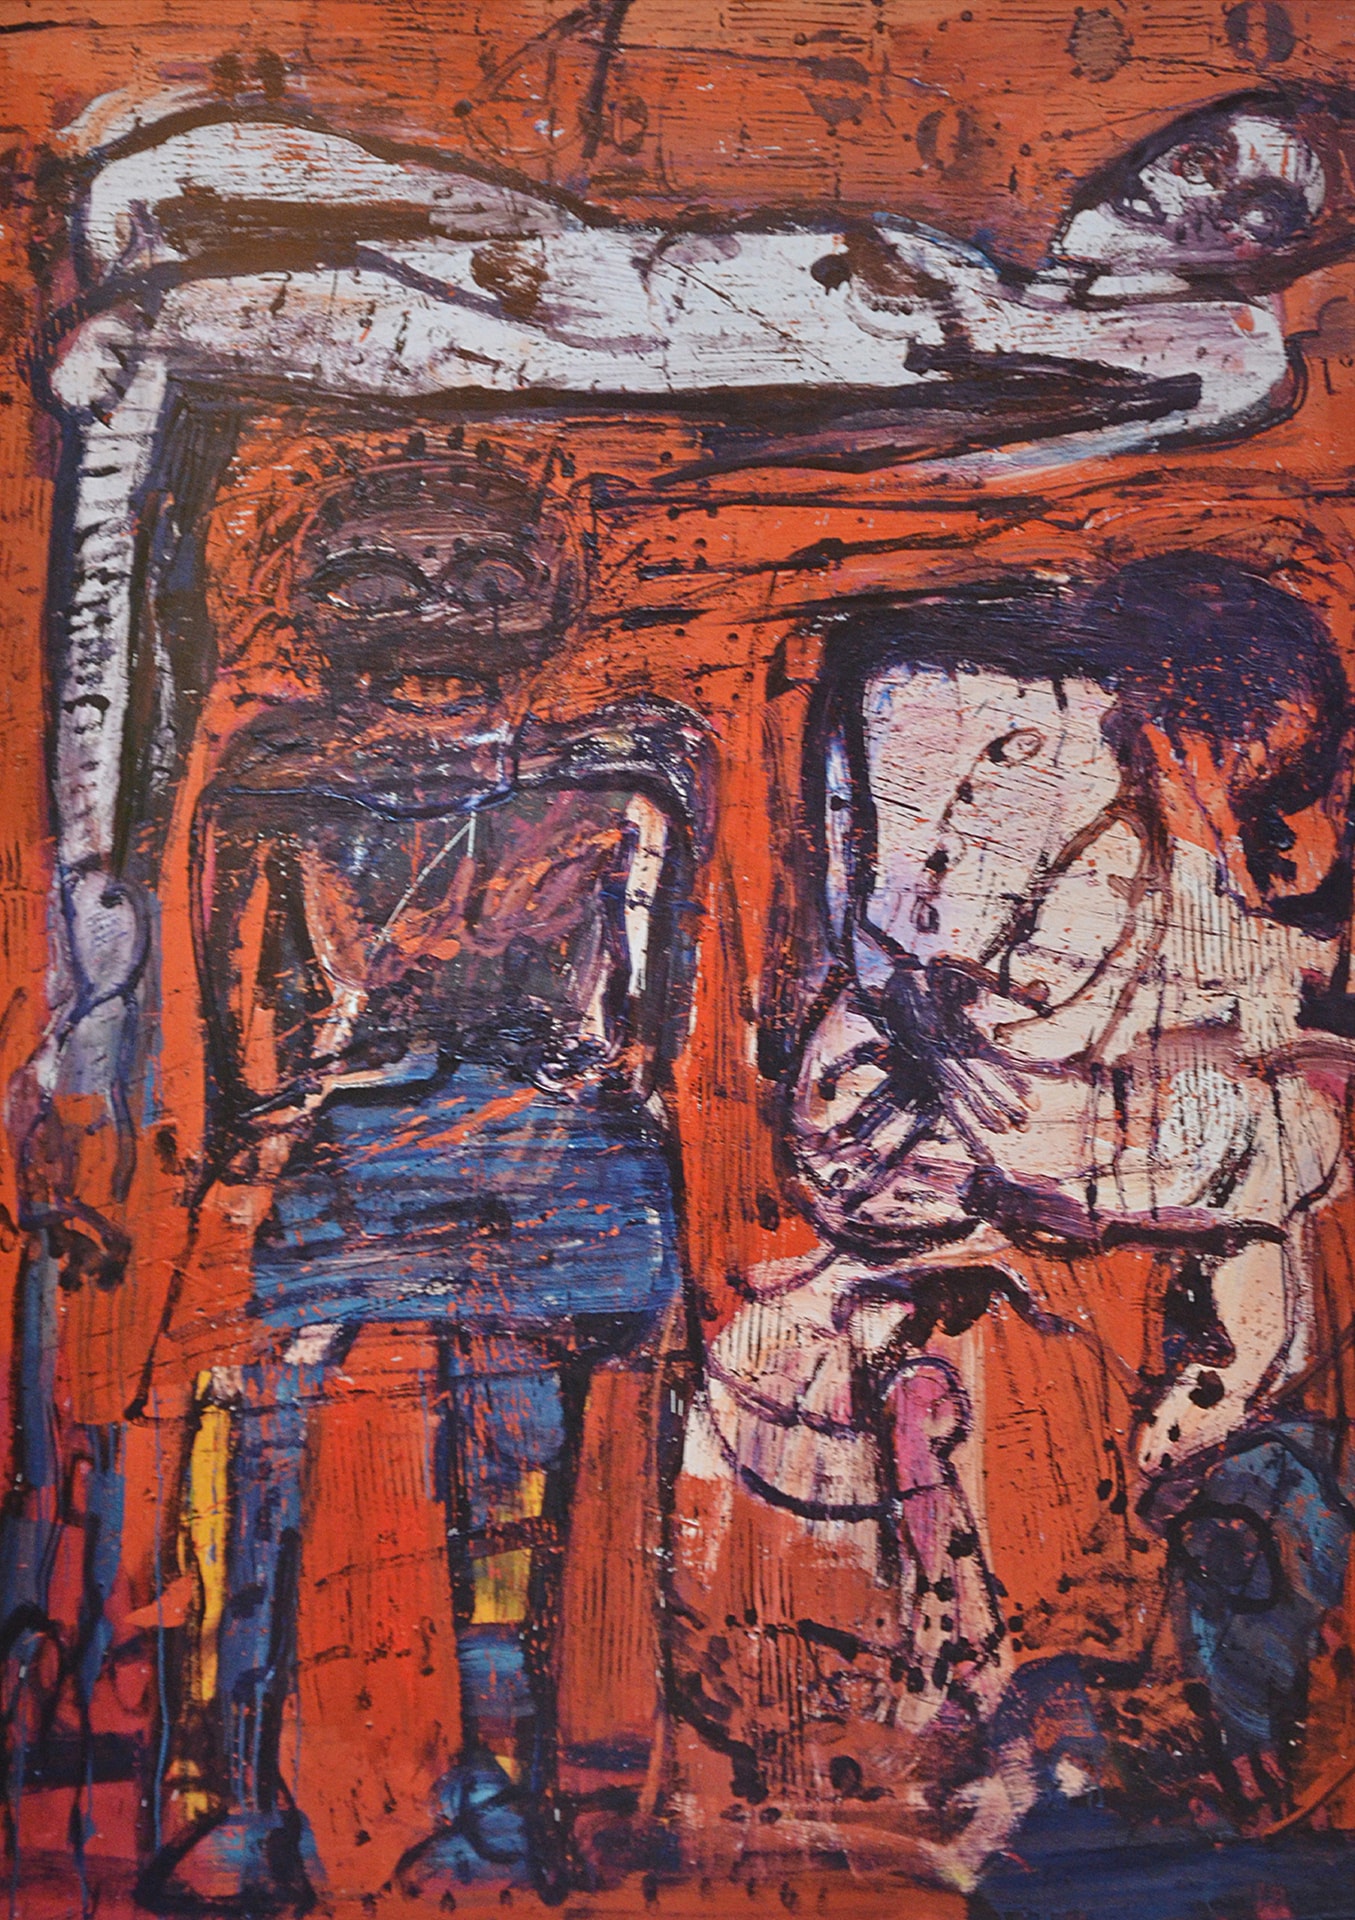 Wild contact, after NY - 1996 - olio su tela - cm 180 x 130 - Museo d’arte Mendrisio